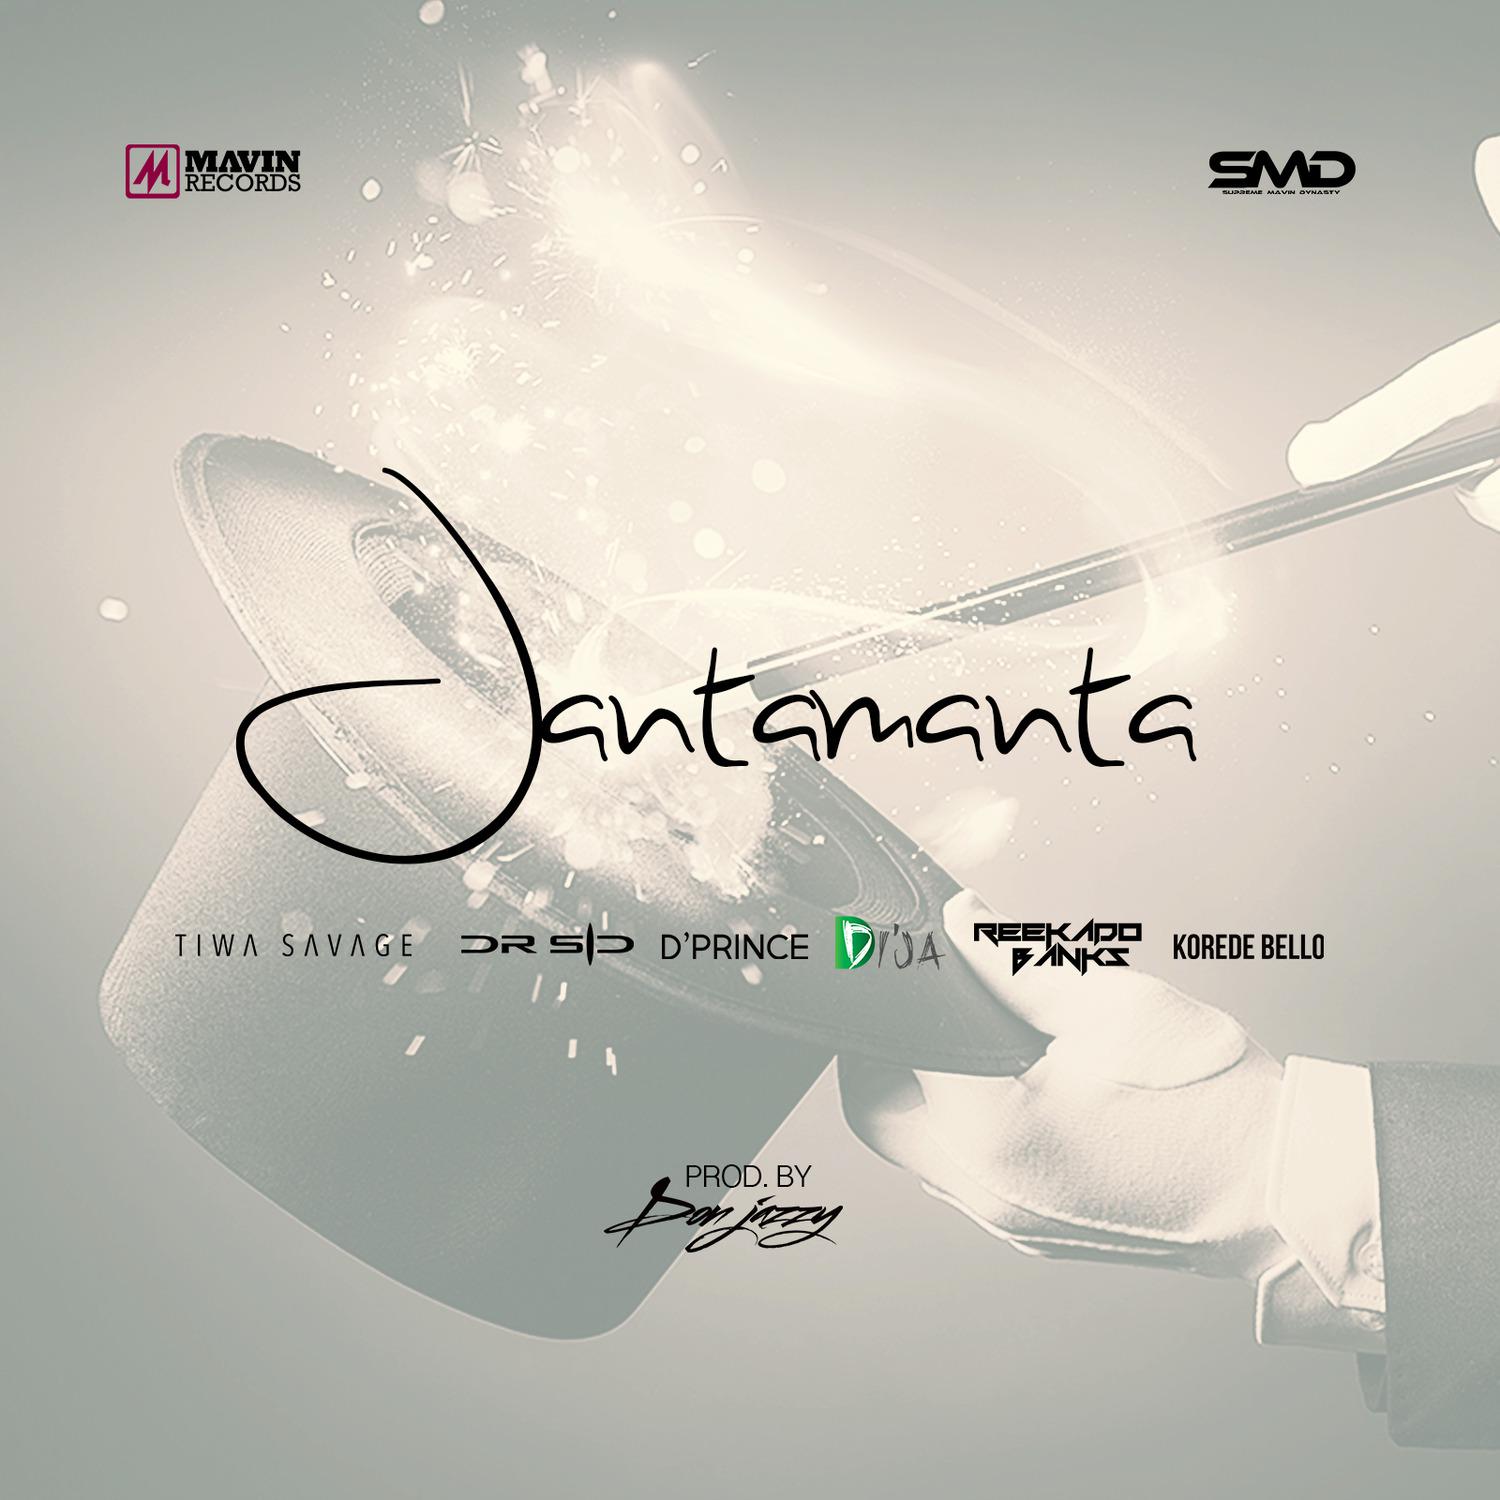 Mavins - Jantamanta (feat. Don Jazzy, Tiwa Savage, Dr Sid, Korede Bello, D'prince, Reekado Banks & Di'ja)